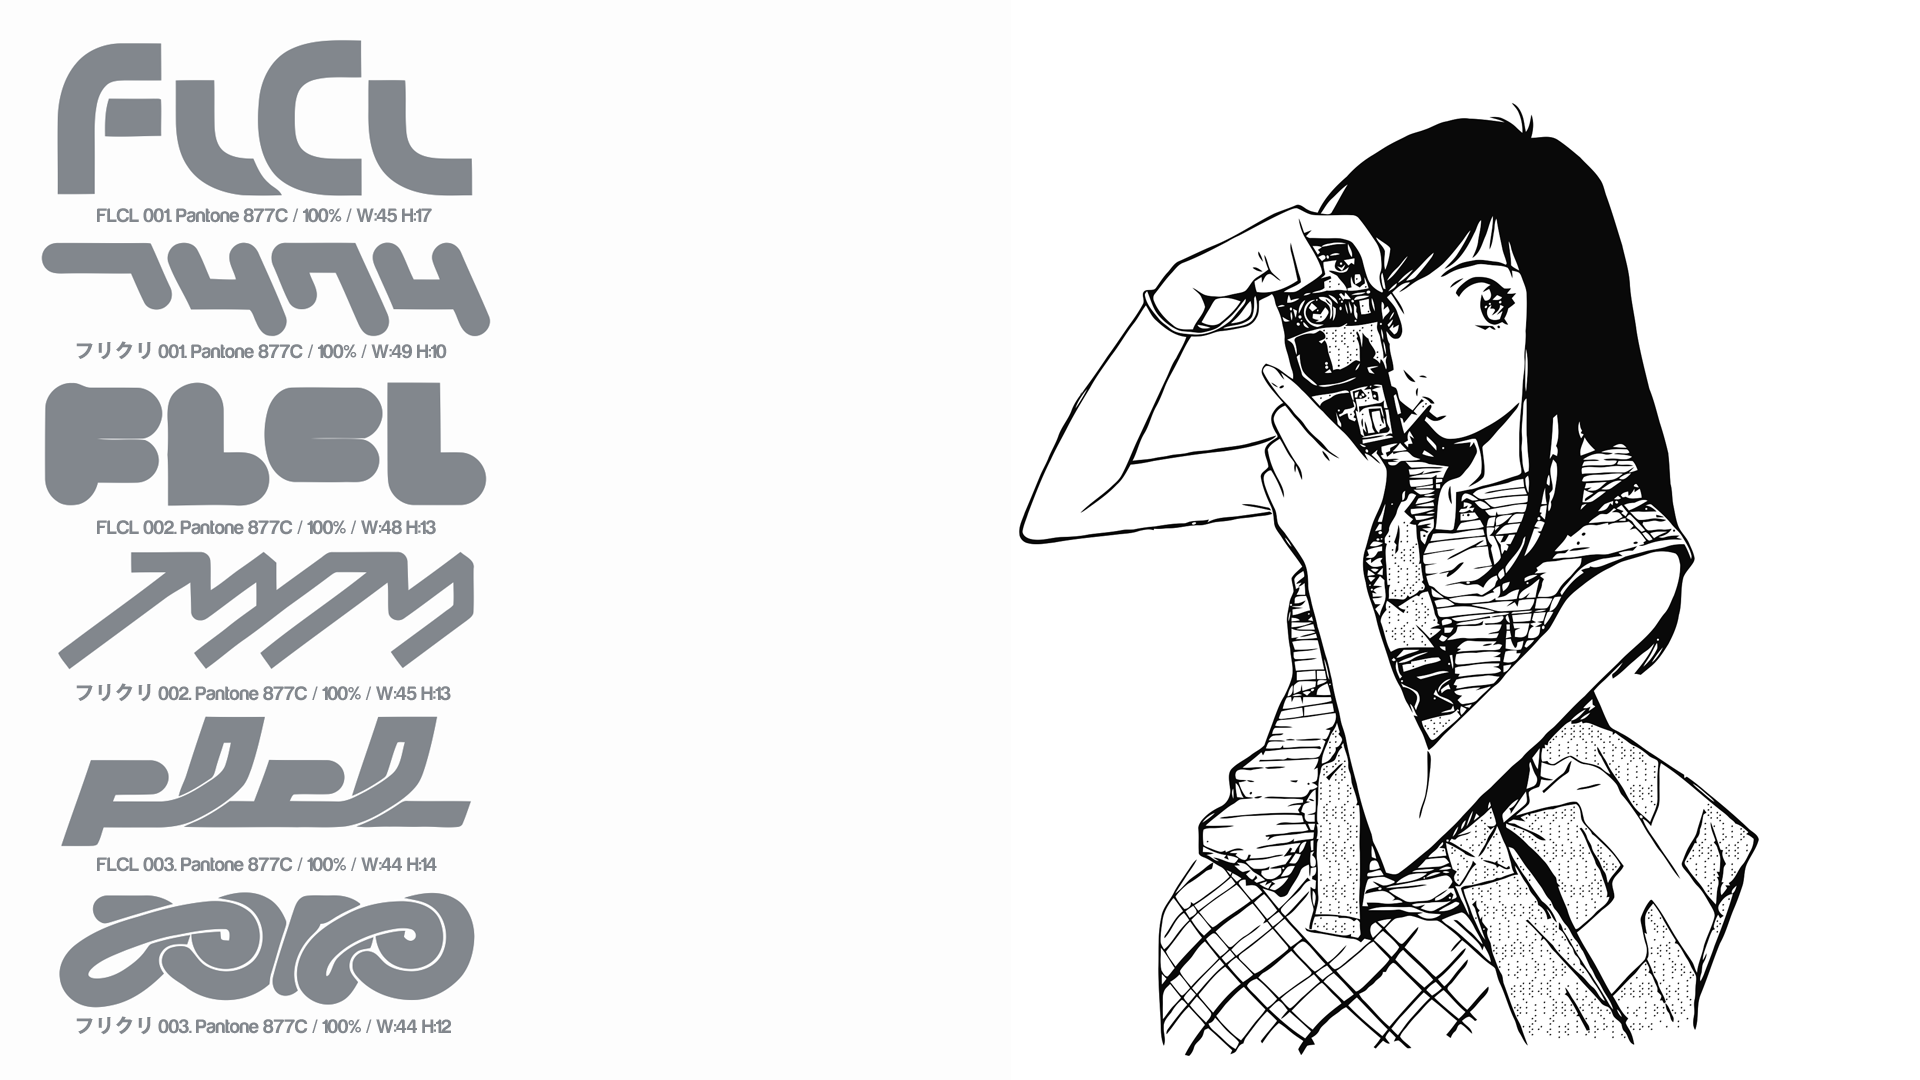 FLCL Haruhara Haruko Monochrome Anime Camera Anime Girls Numbers 1920x1080